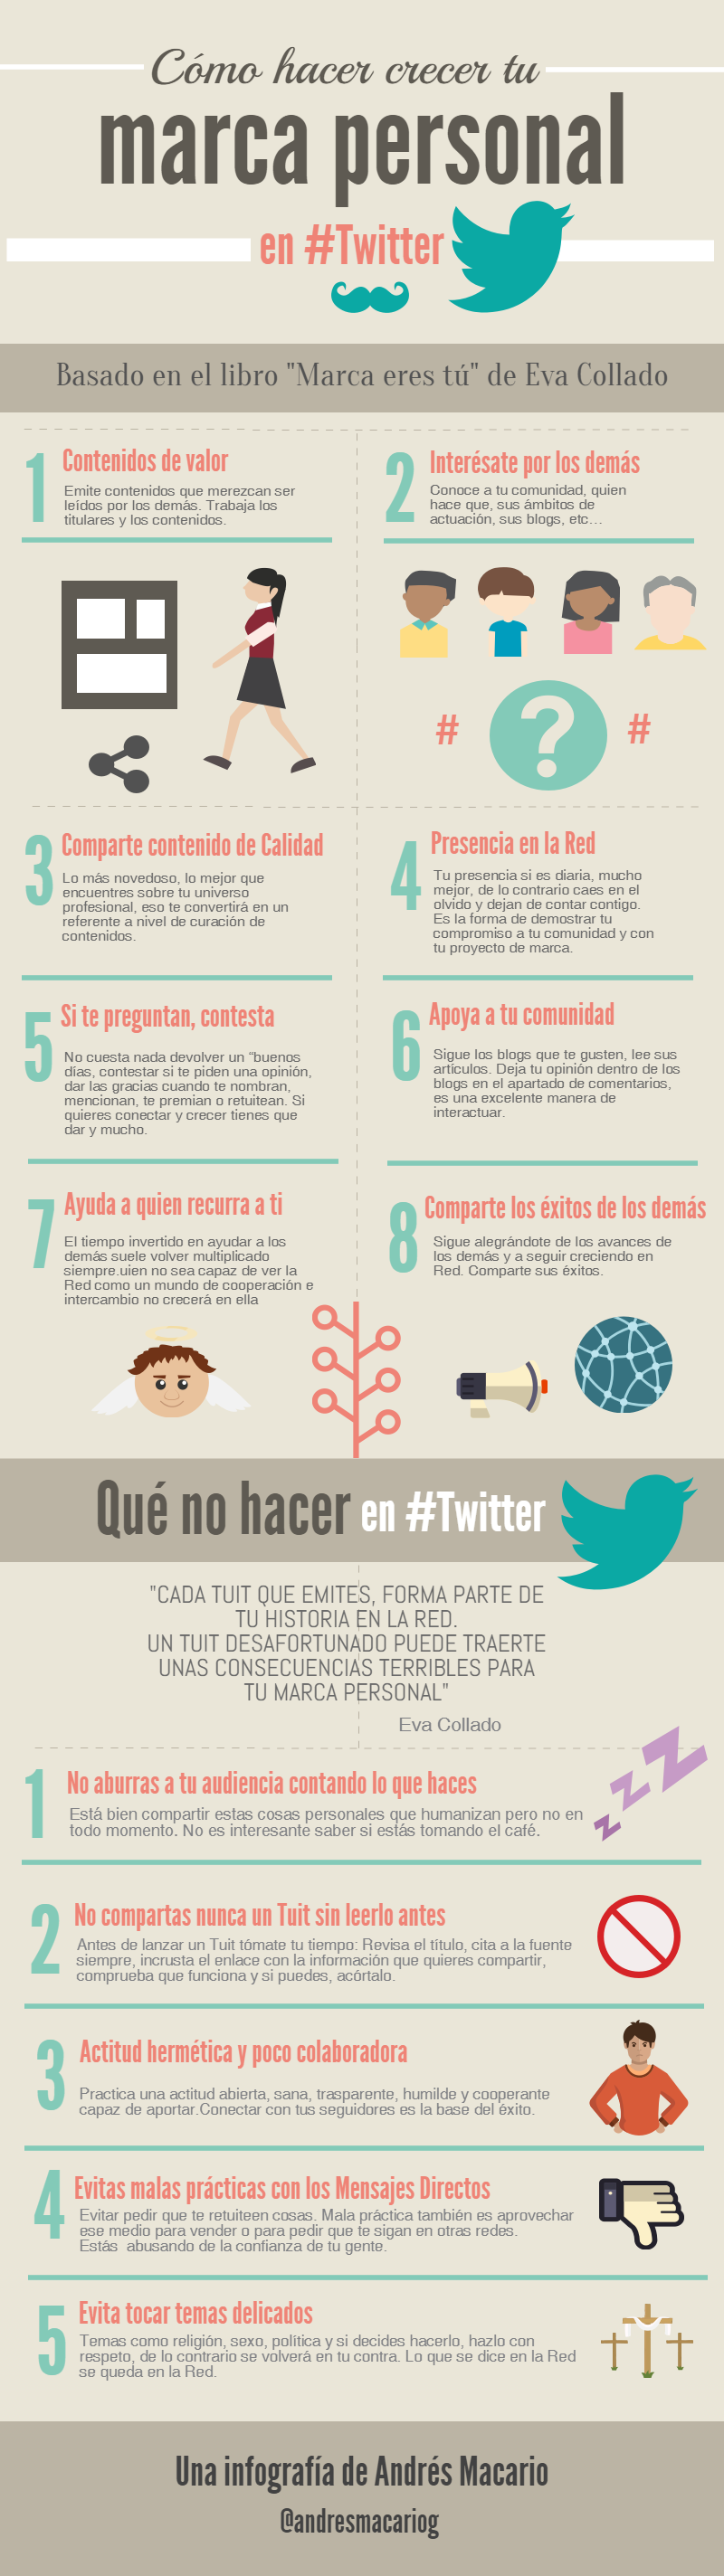 Como hacer crecer tu marca personal en Twitter - infografia Andres Macario